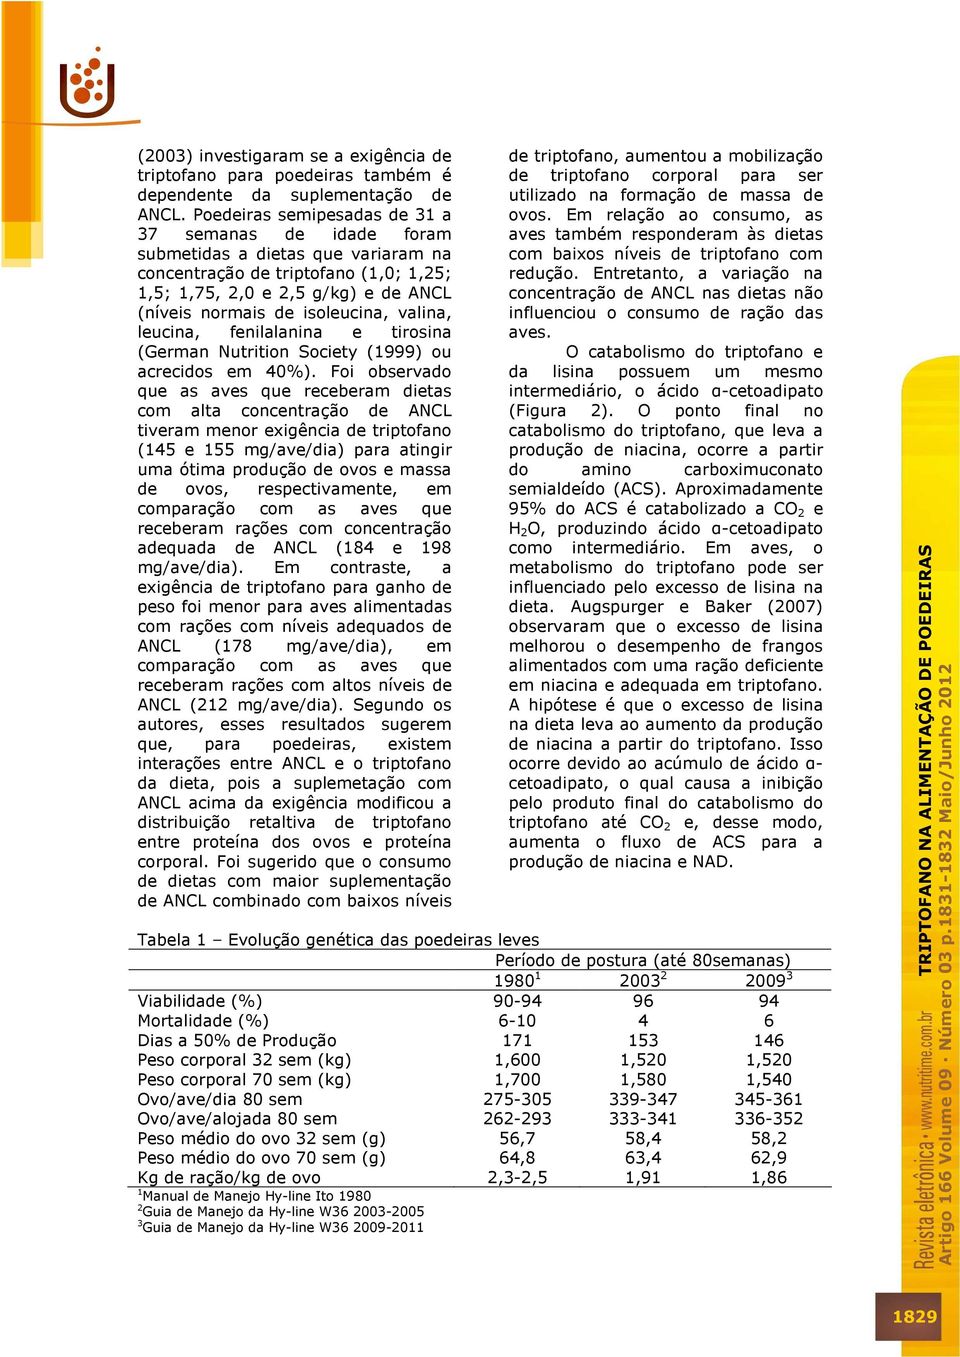 valina, leucina, fenilalanina e tirosina (German Nutrition Society (1999) ou acrecidos em 40%).